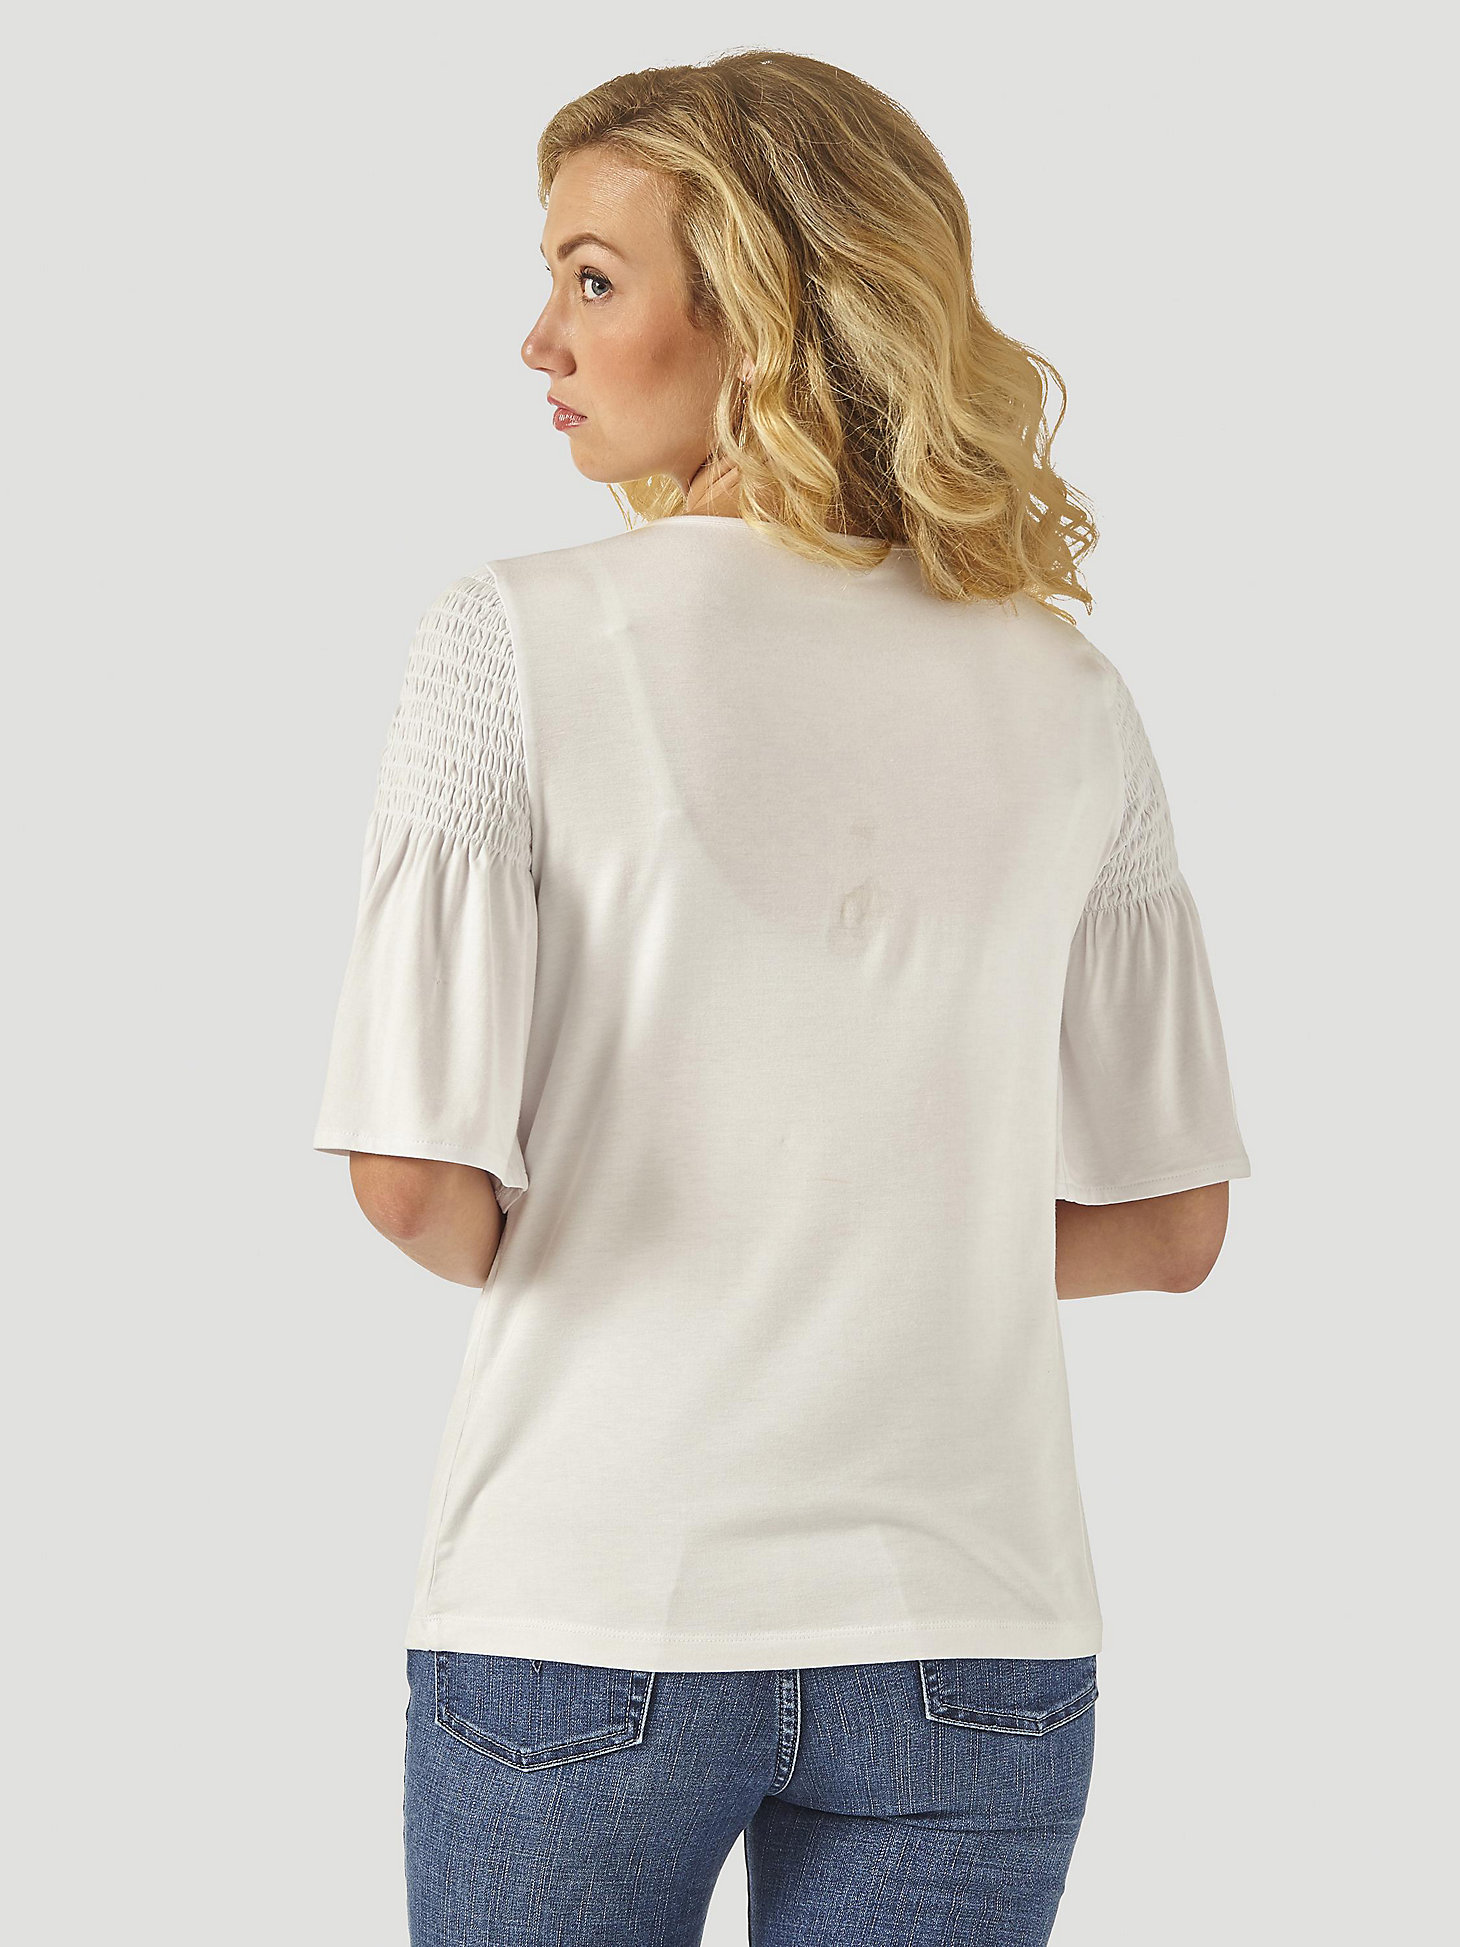 Women's Smocked Shoulder 3/4 Sleeve Top in White alternative view 1